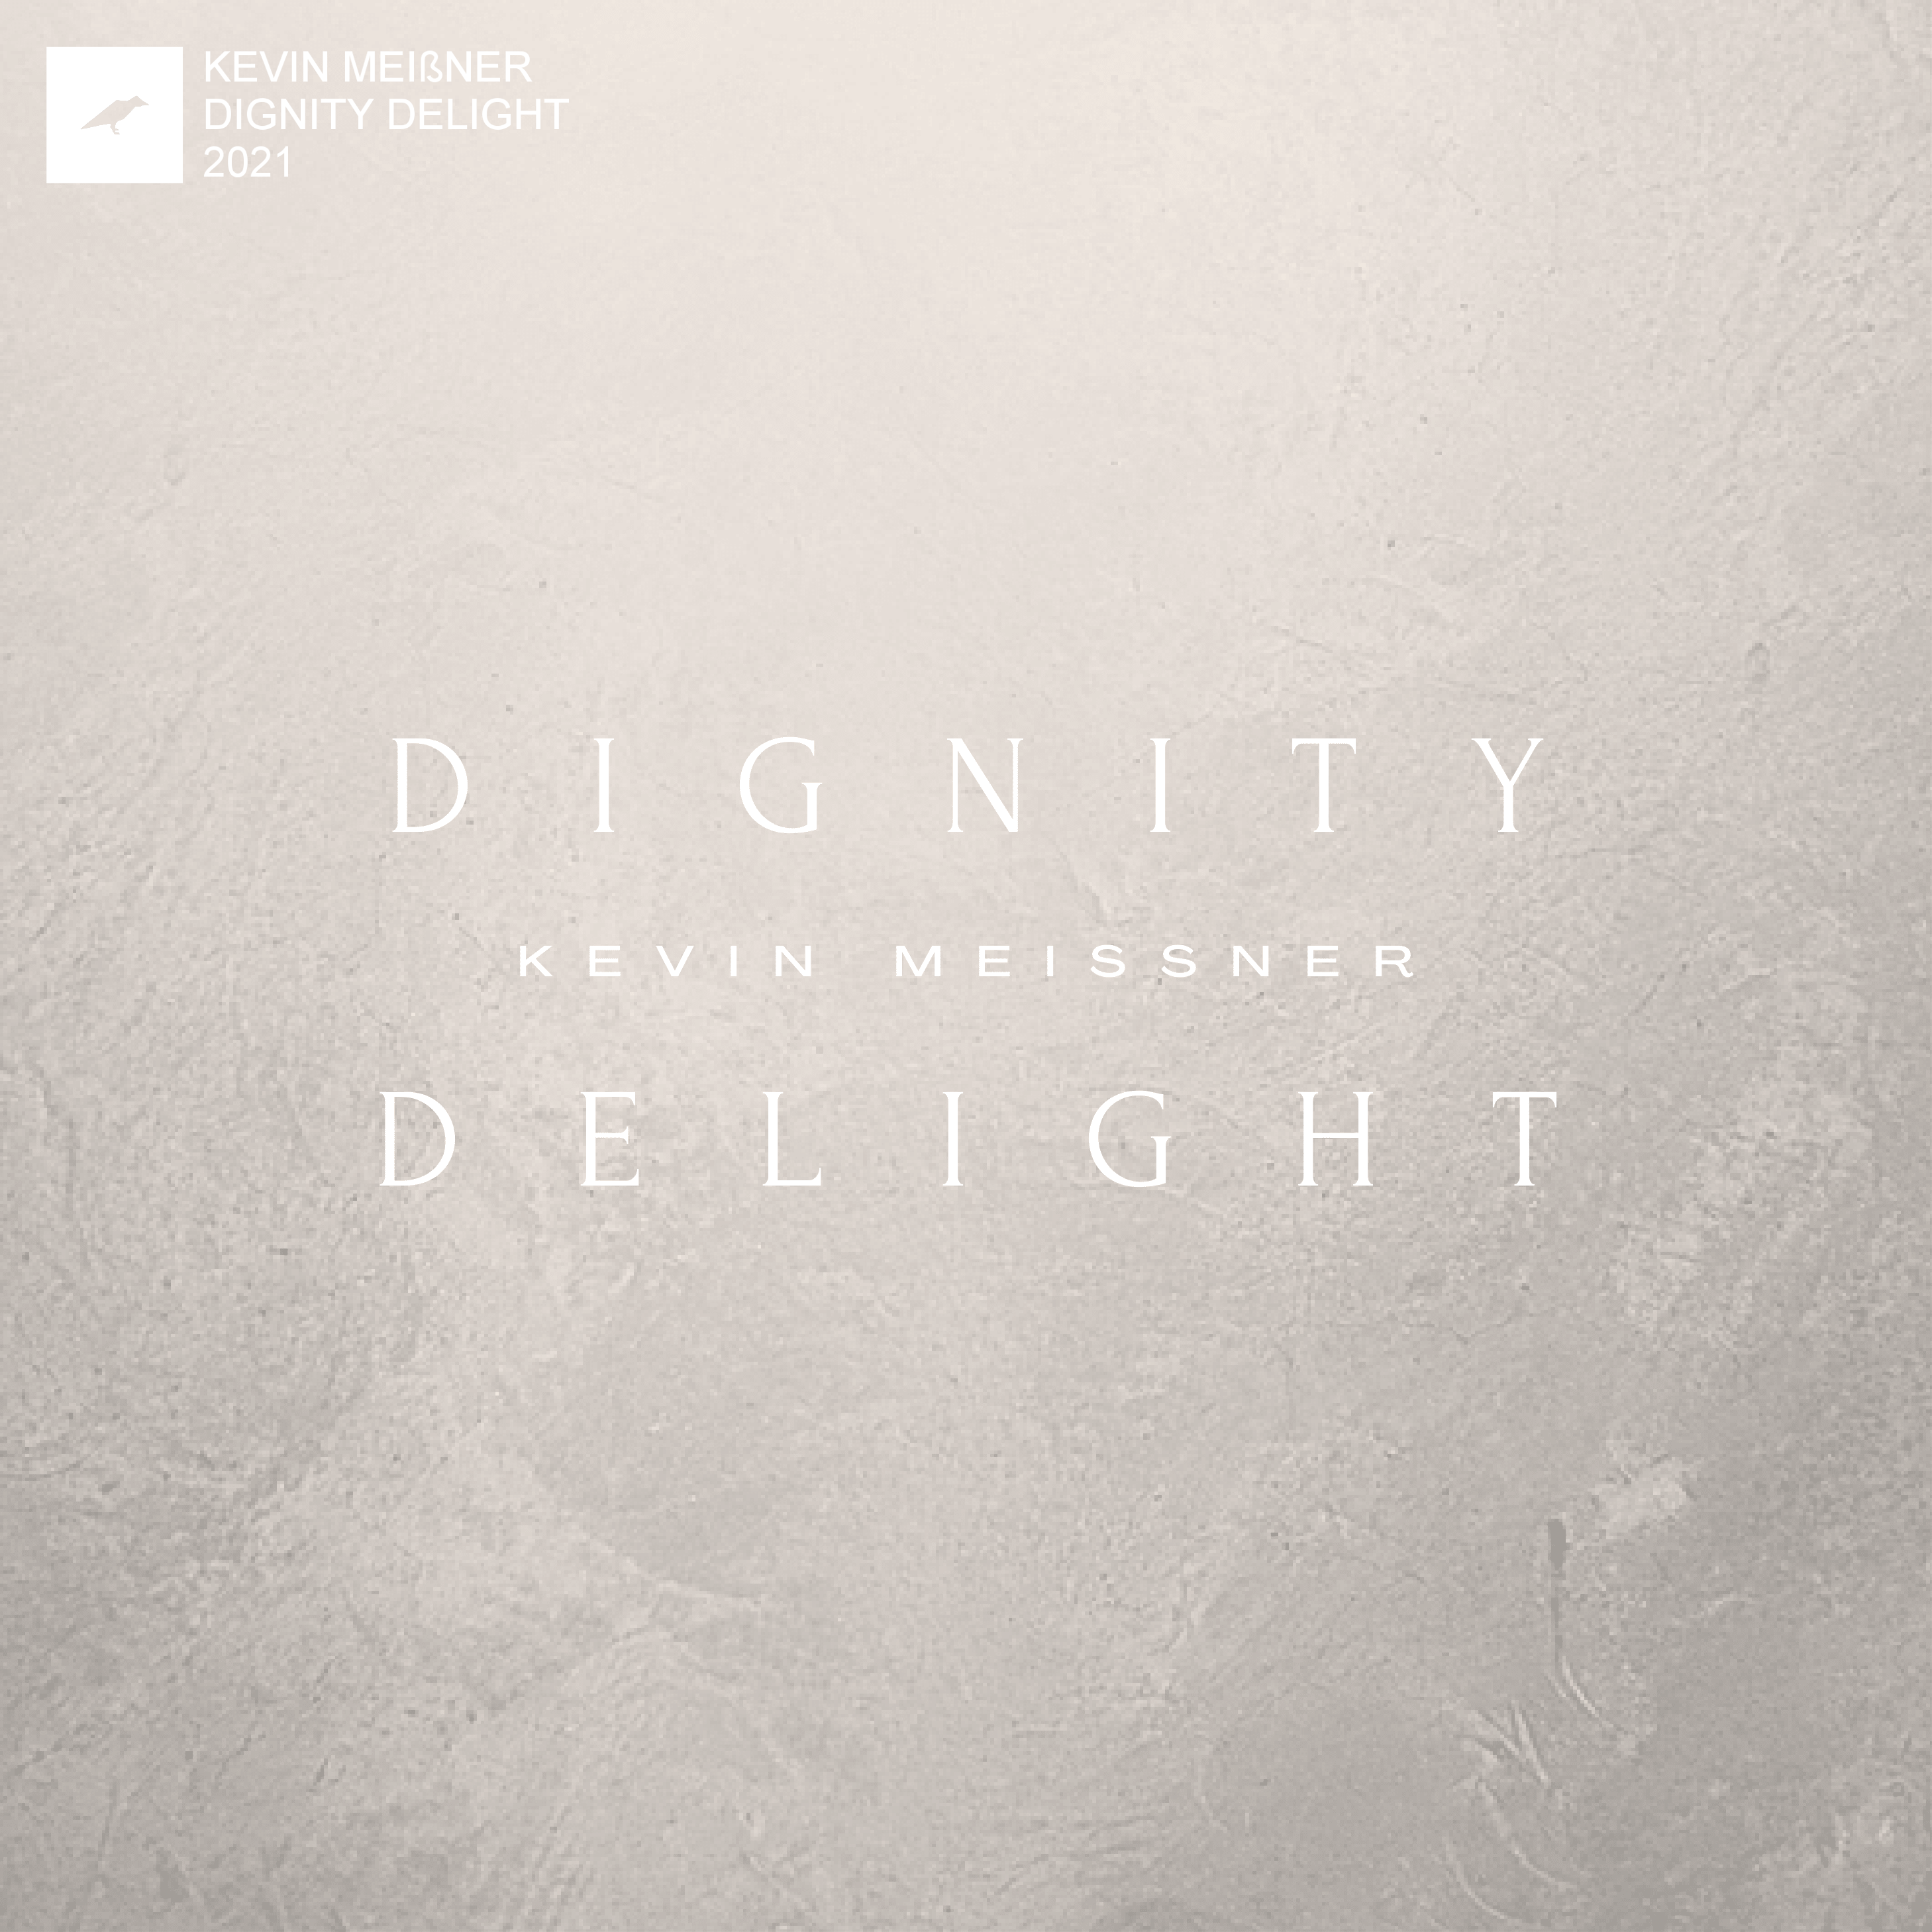 Kevin Meißner Dignity Delight Official Cover Art